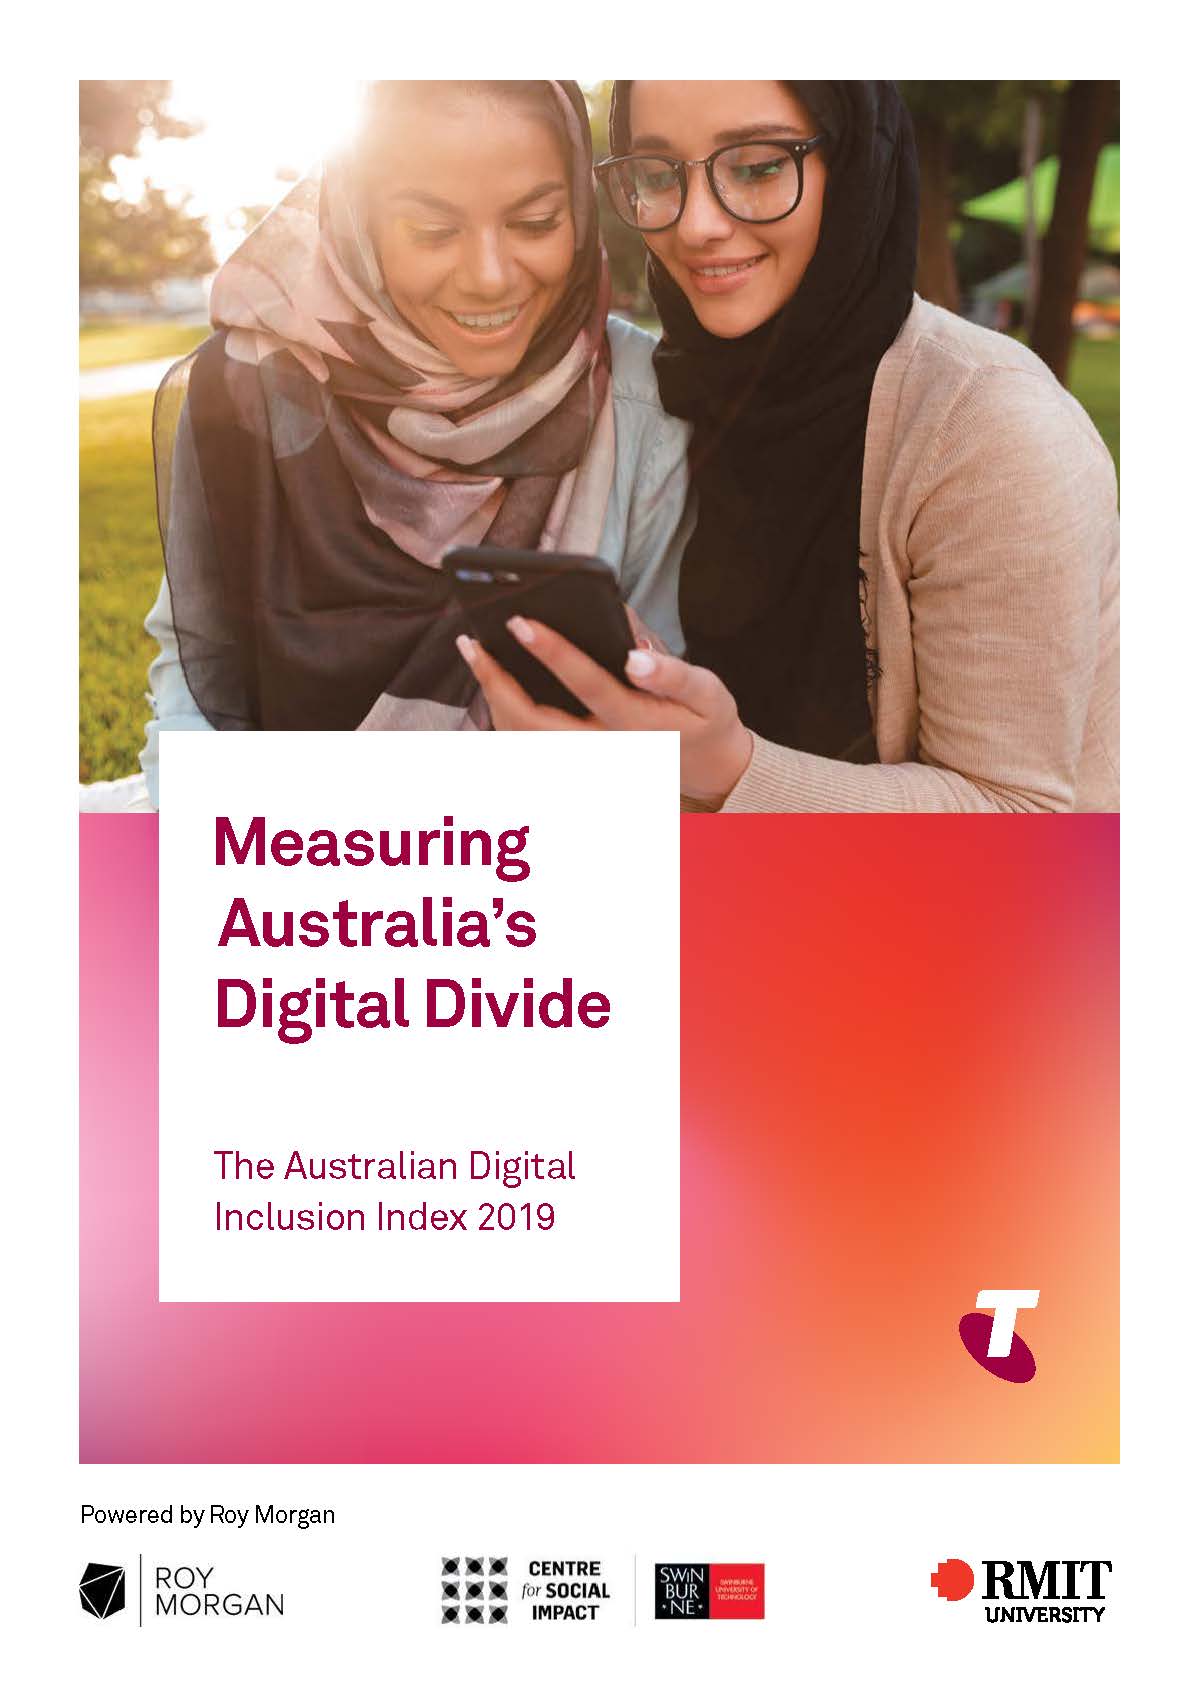 The 2019 Australian Digital Inclusion Index report